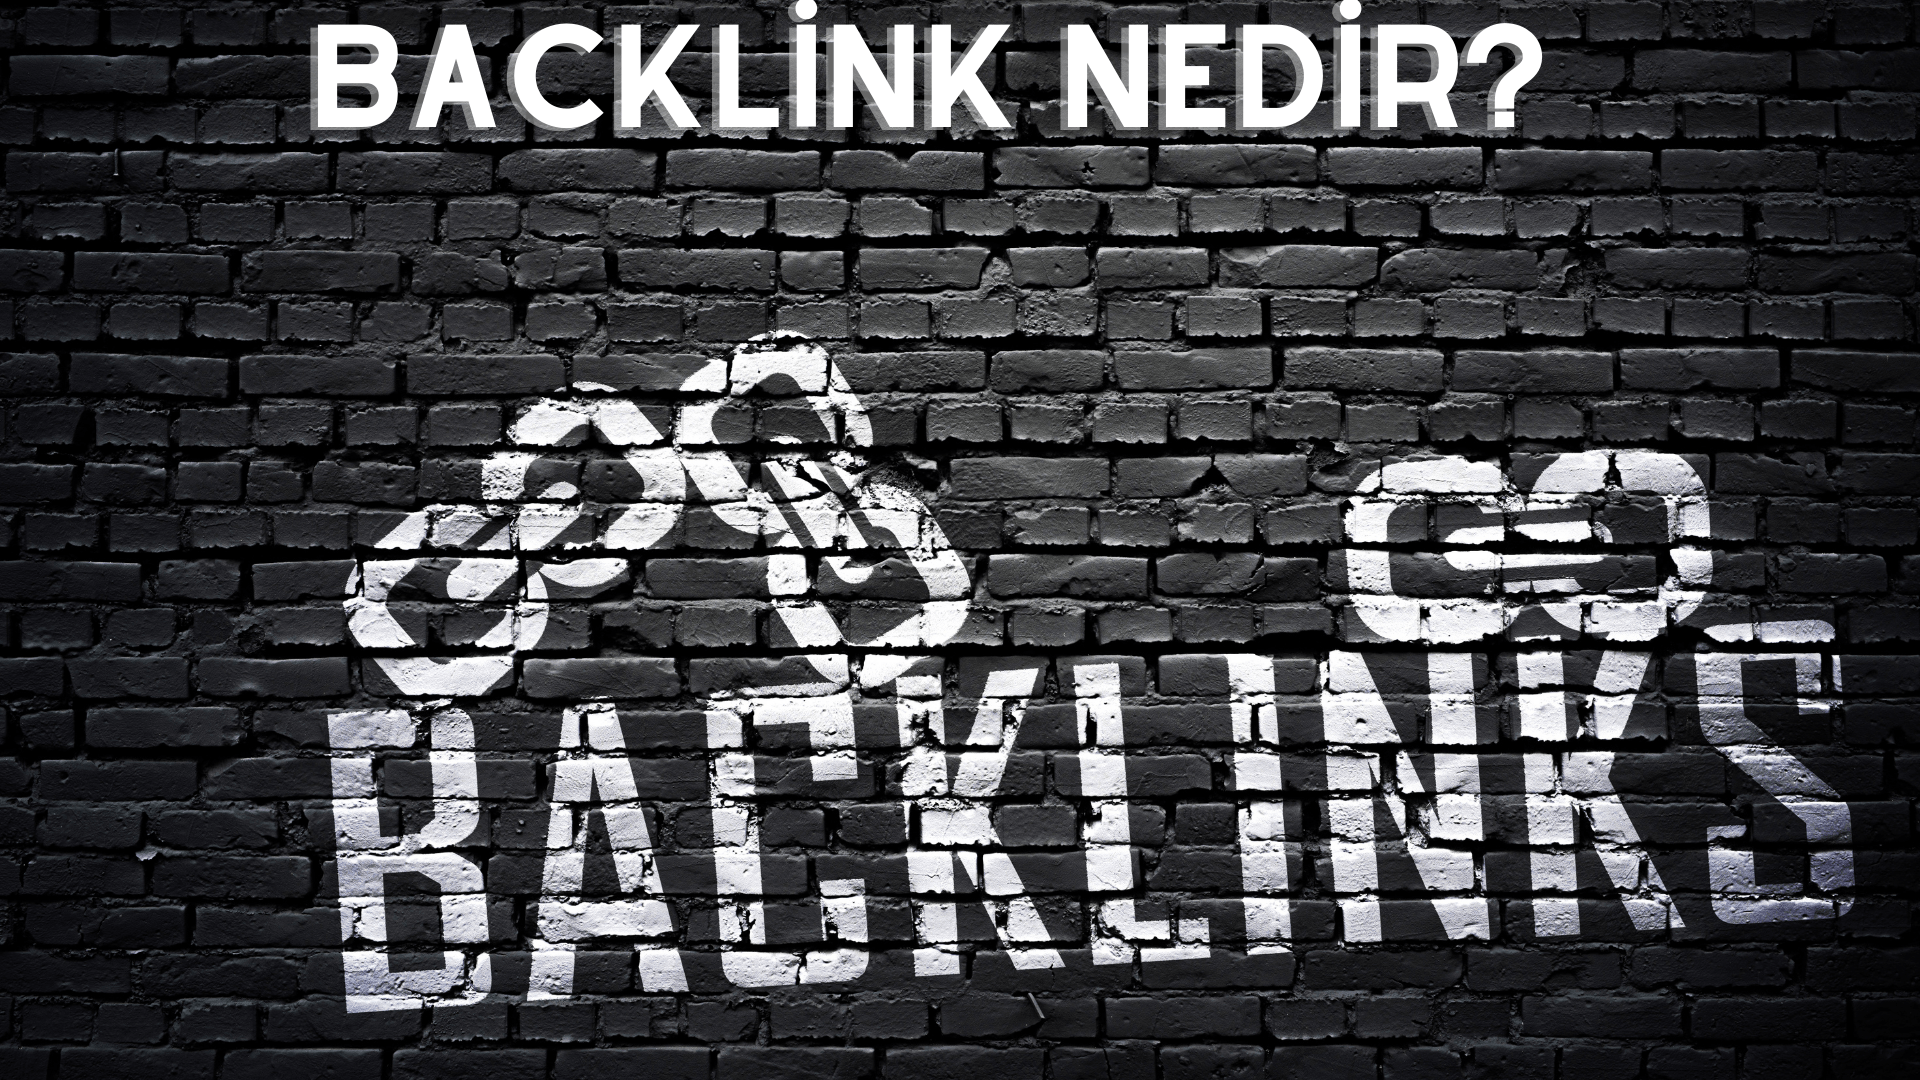 Backlink Nedir seografik.net